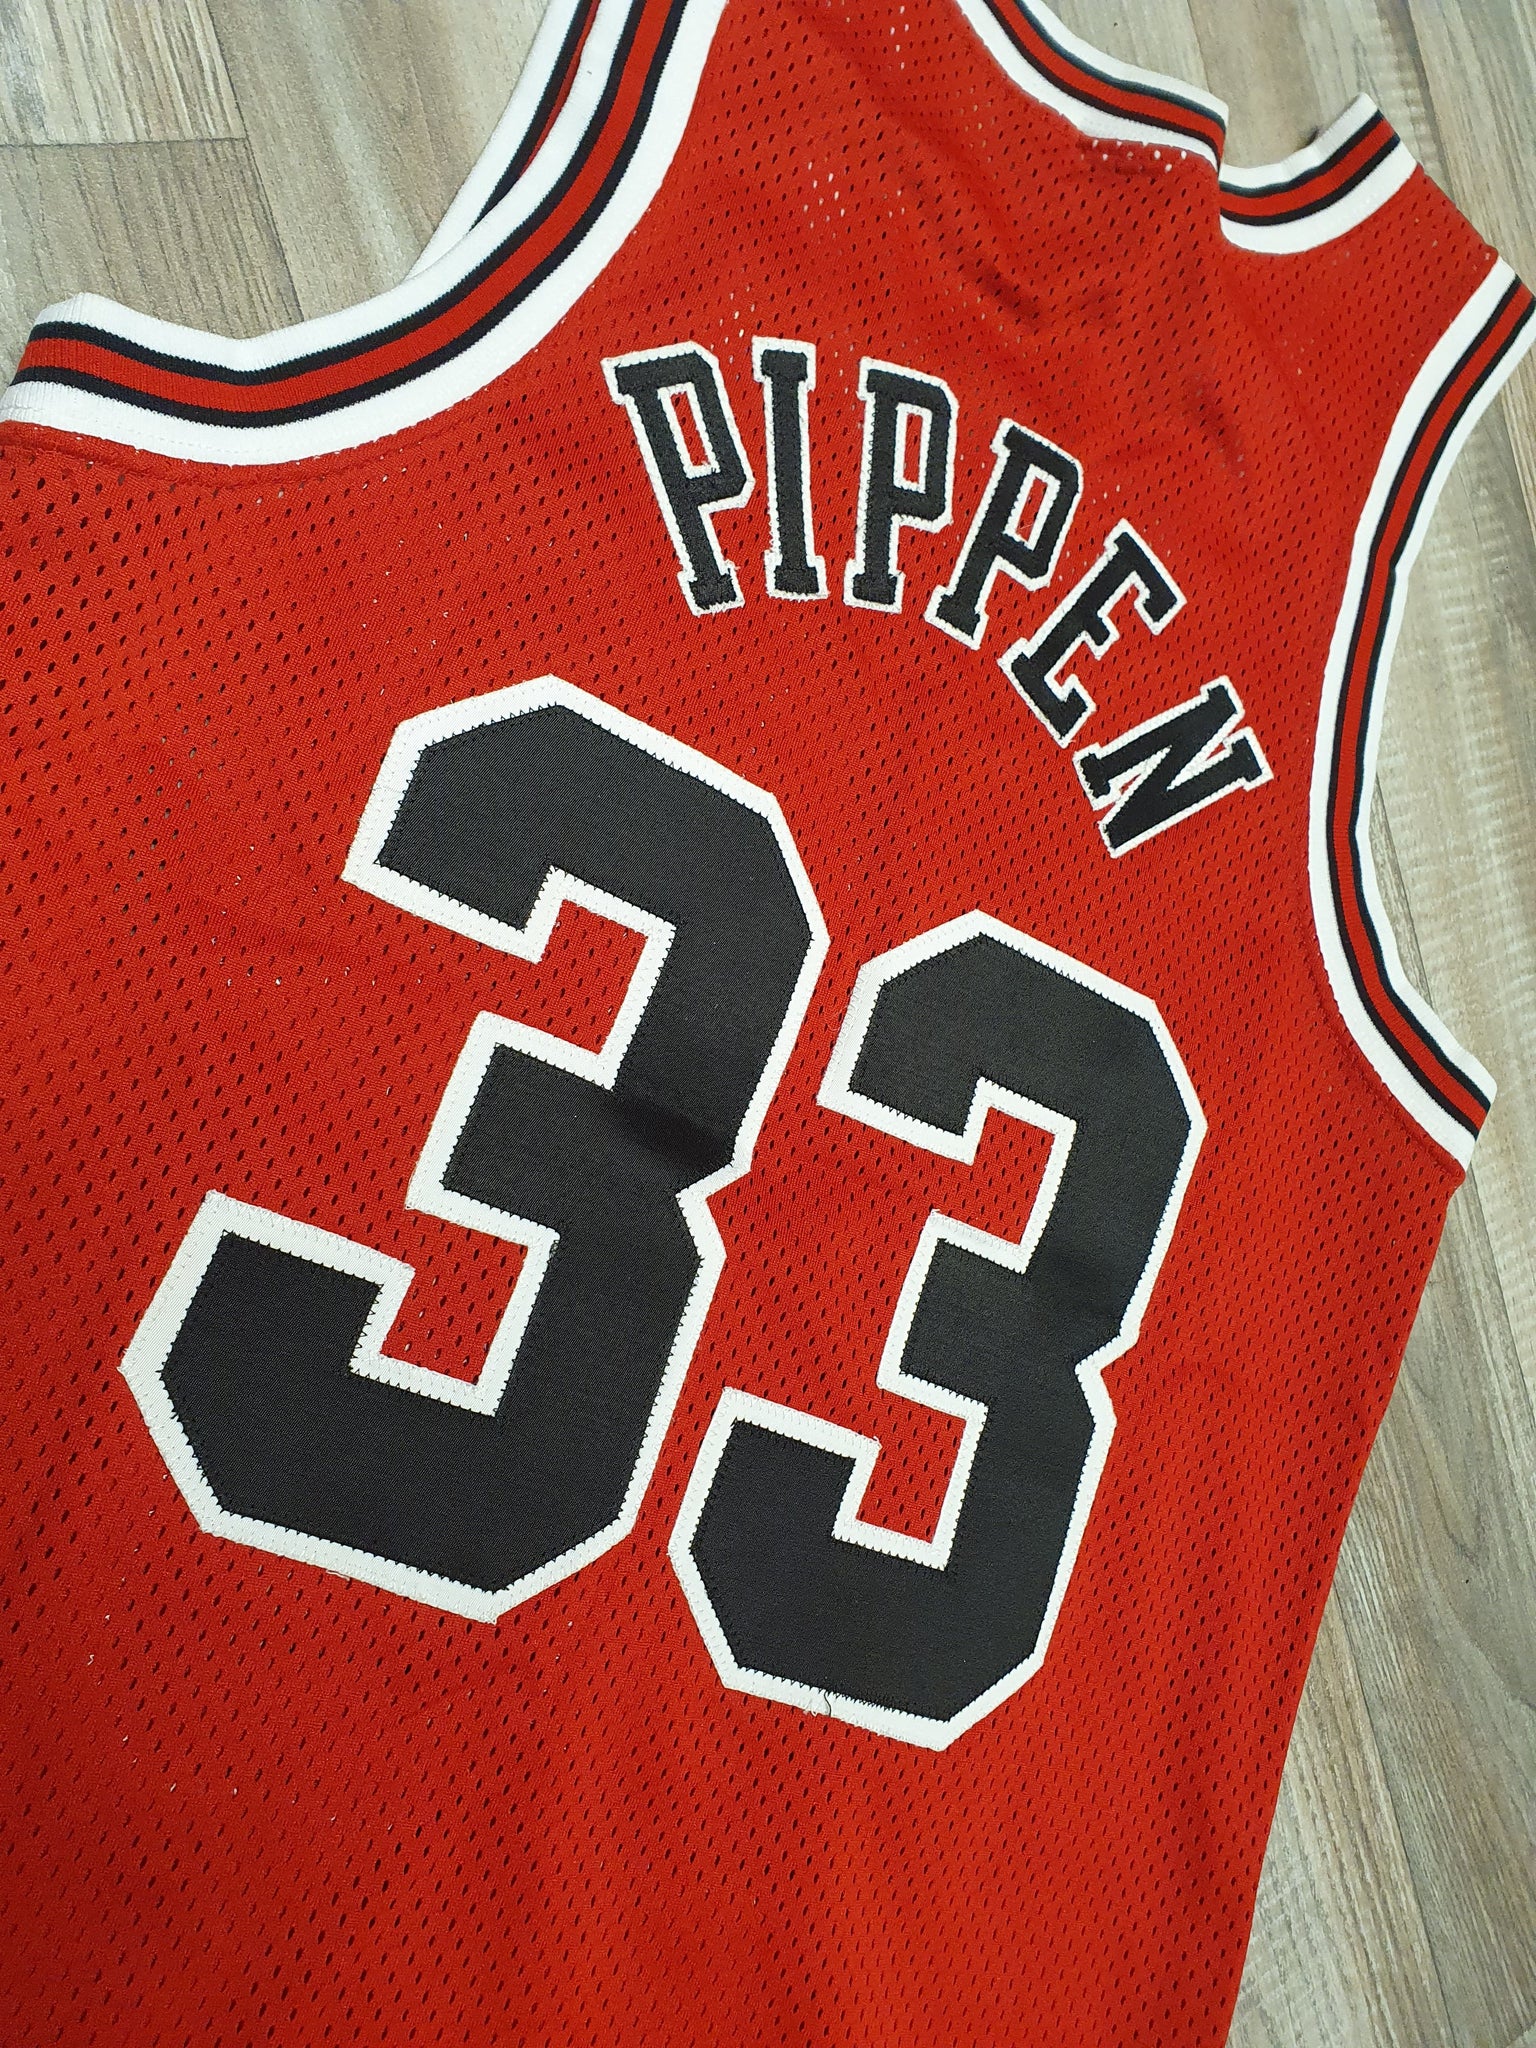 Scottie Pippen Chicago Bulls Swingman Jersey Size 3xl Brand New